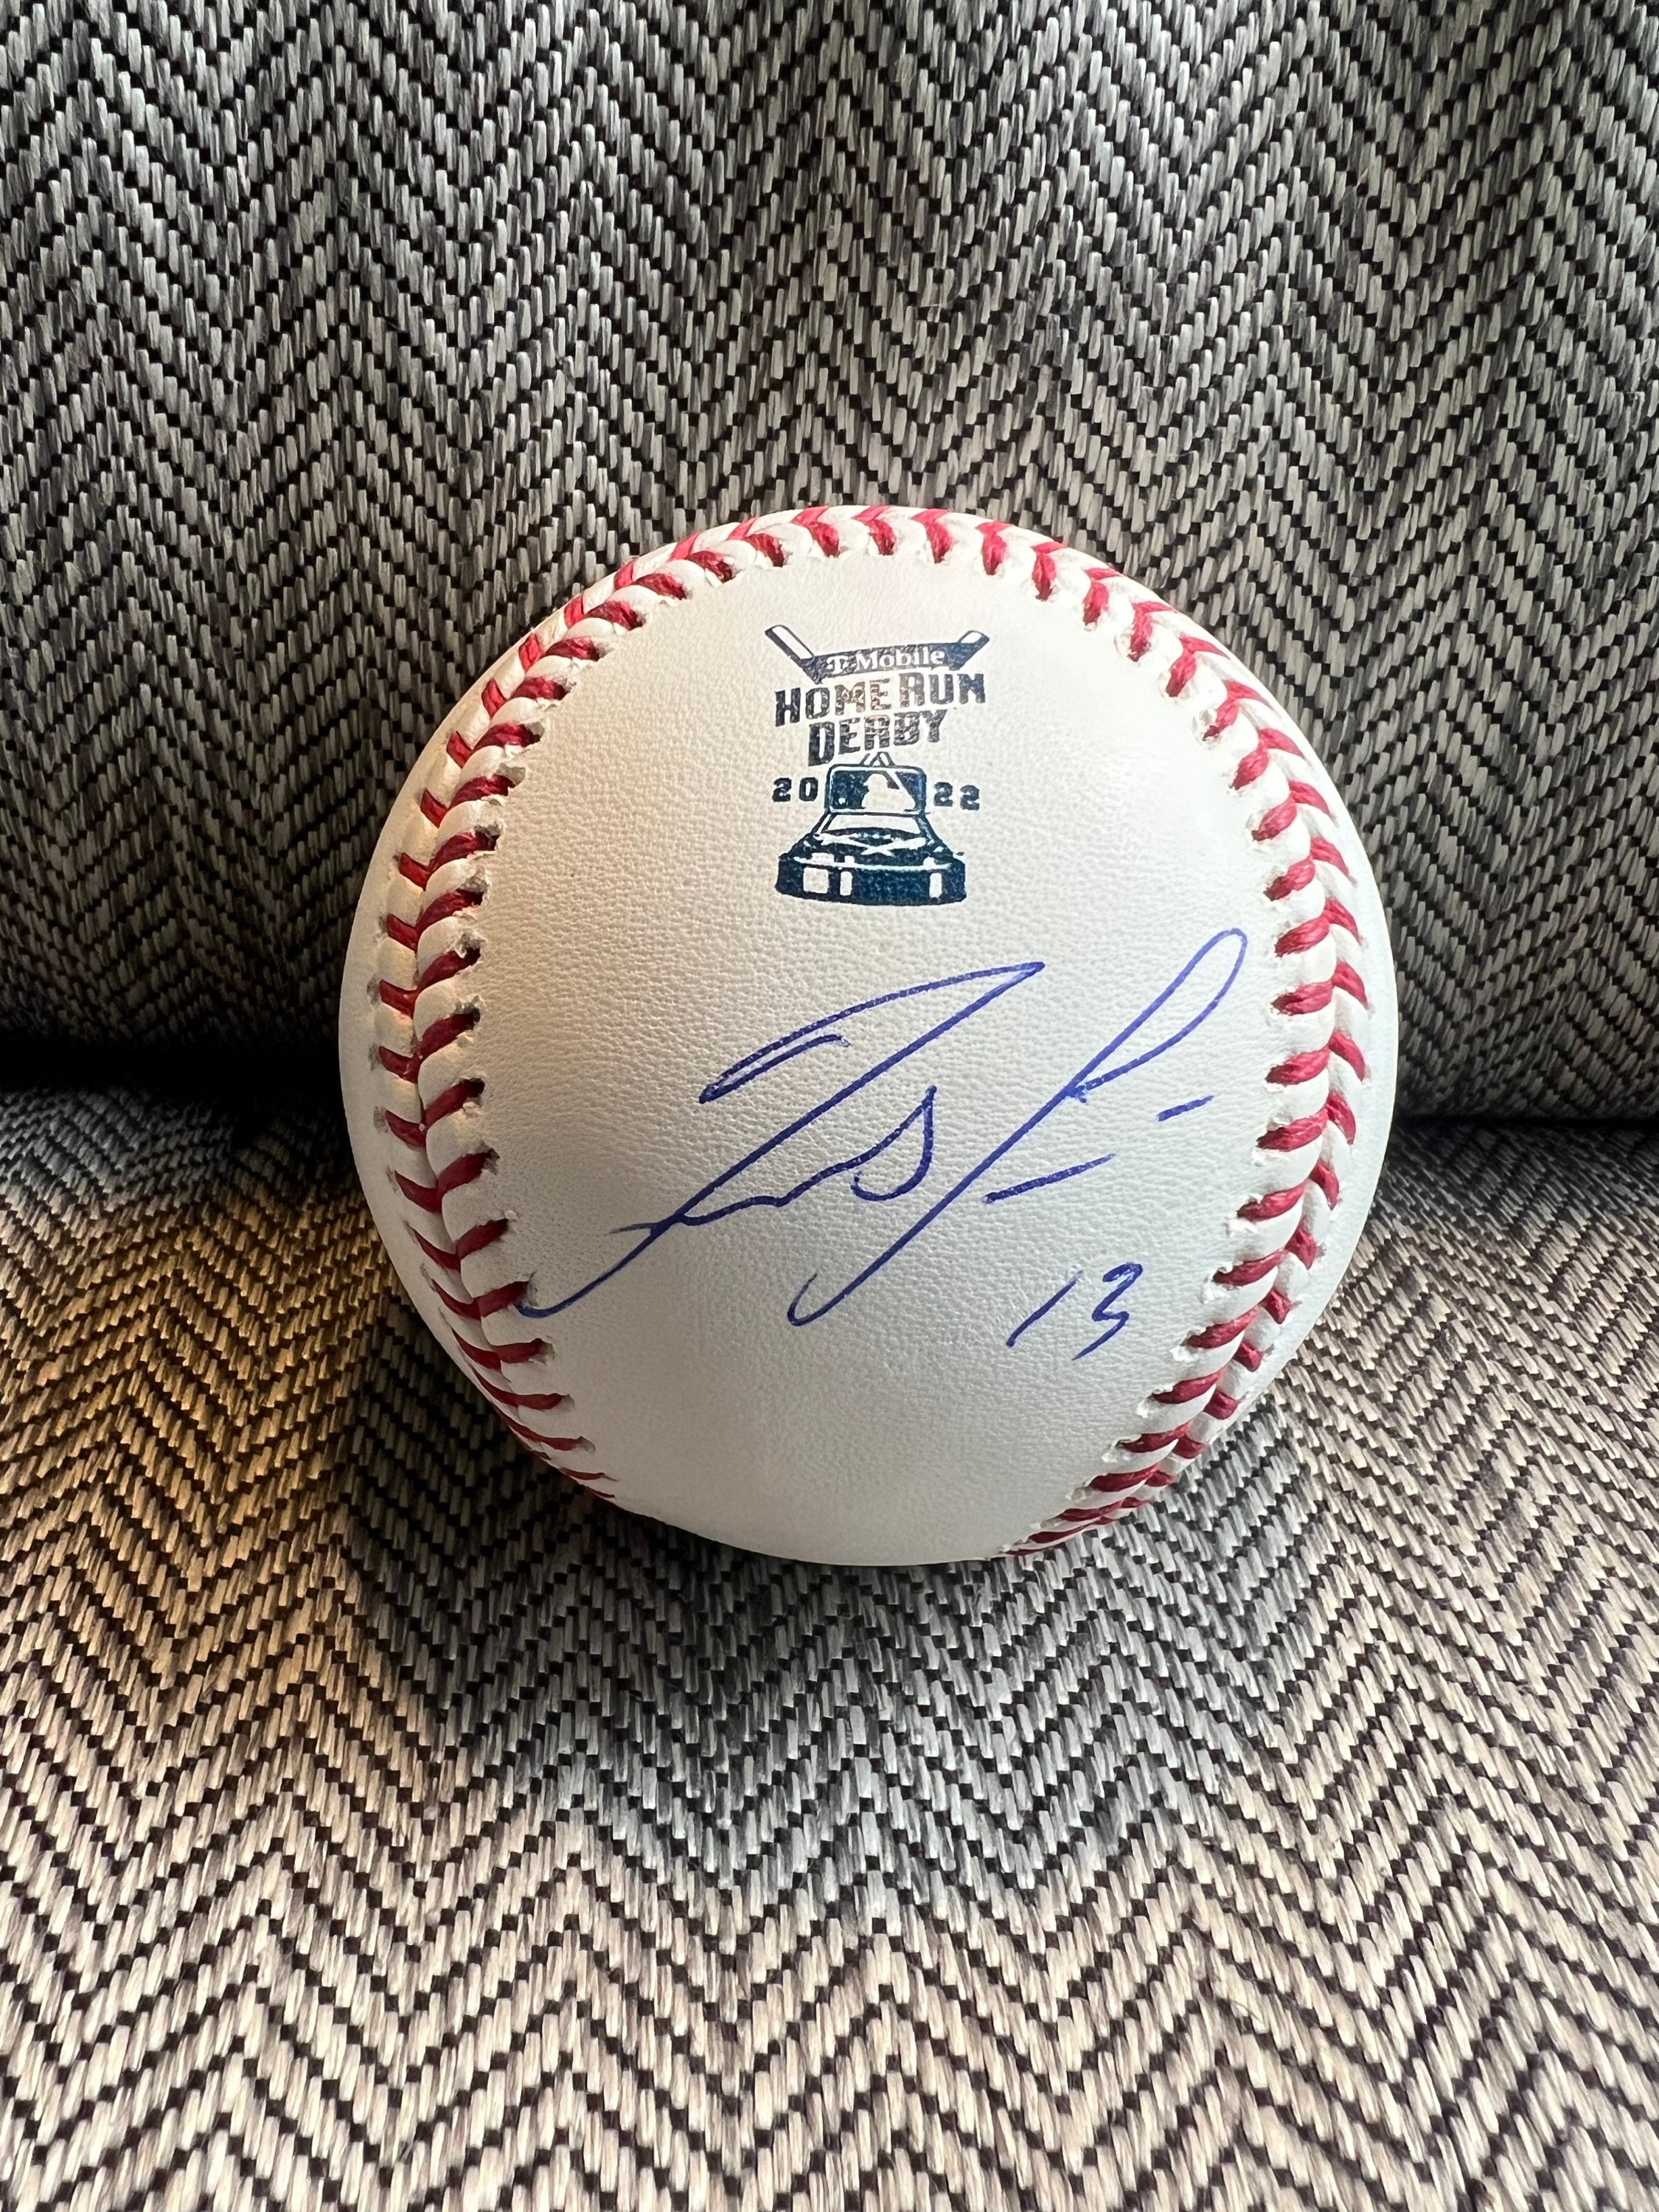 Ronald Acuna Jr. 2022 Major League Baseball All-Star Game Autographed Jersey